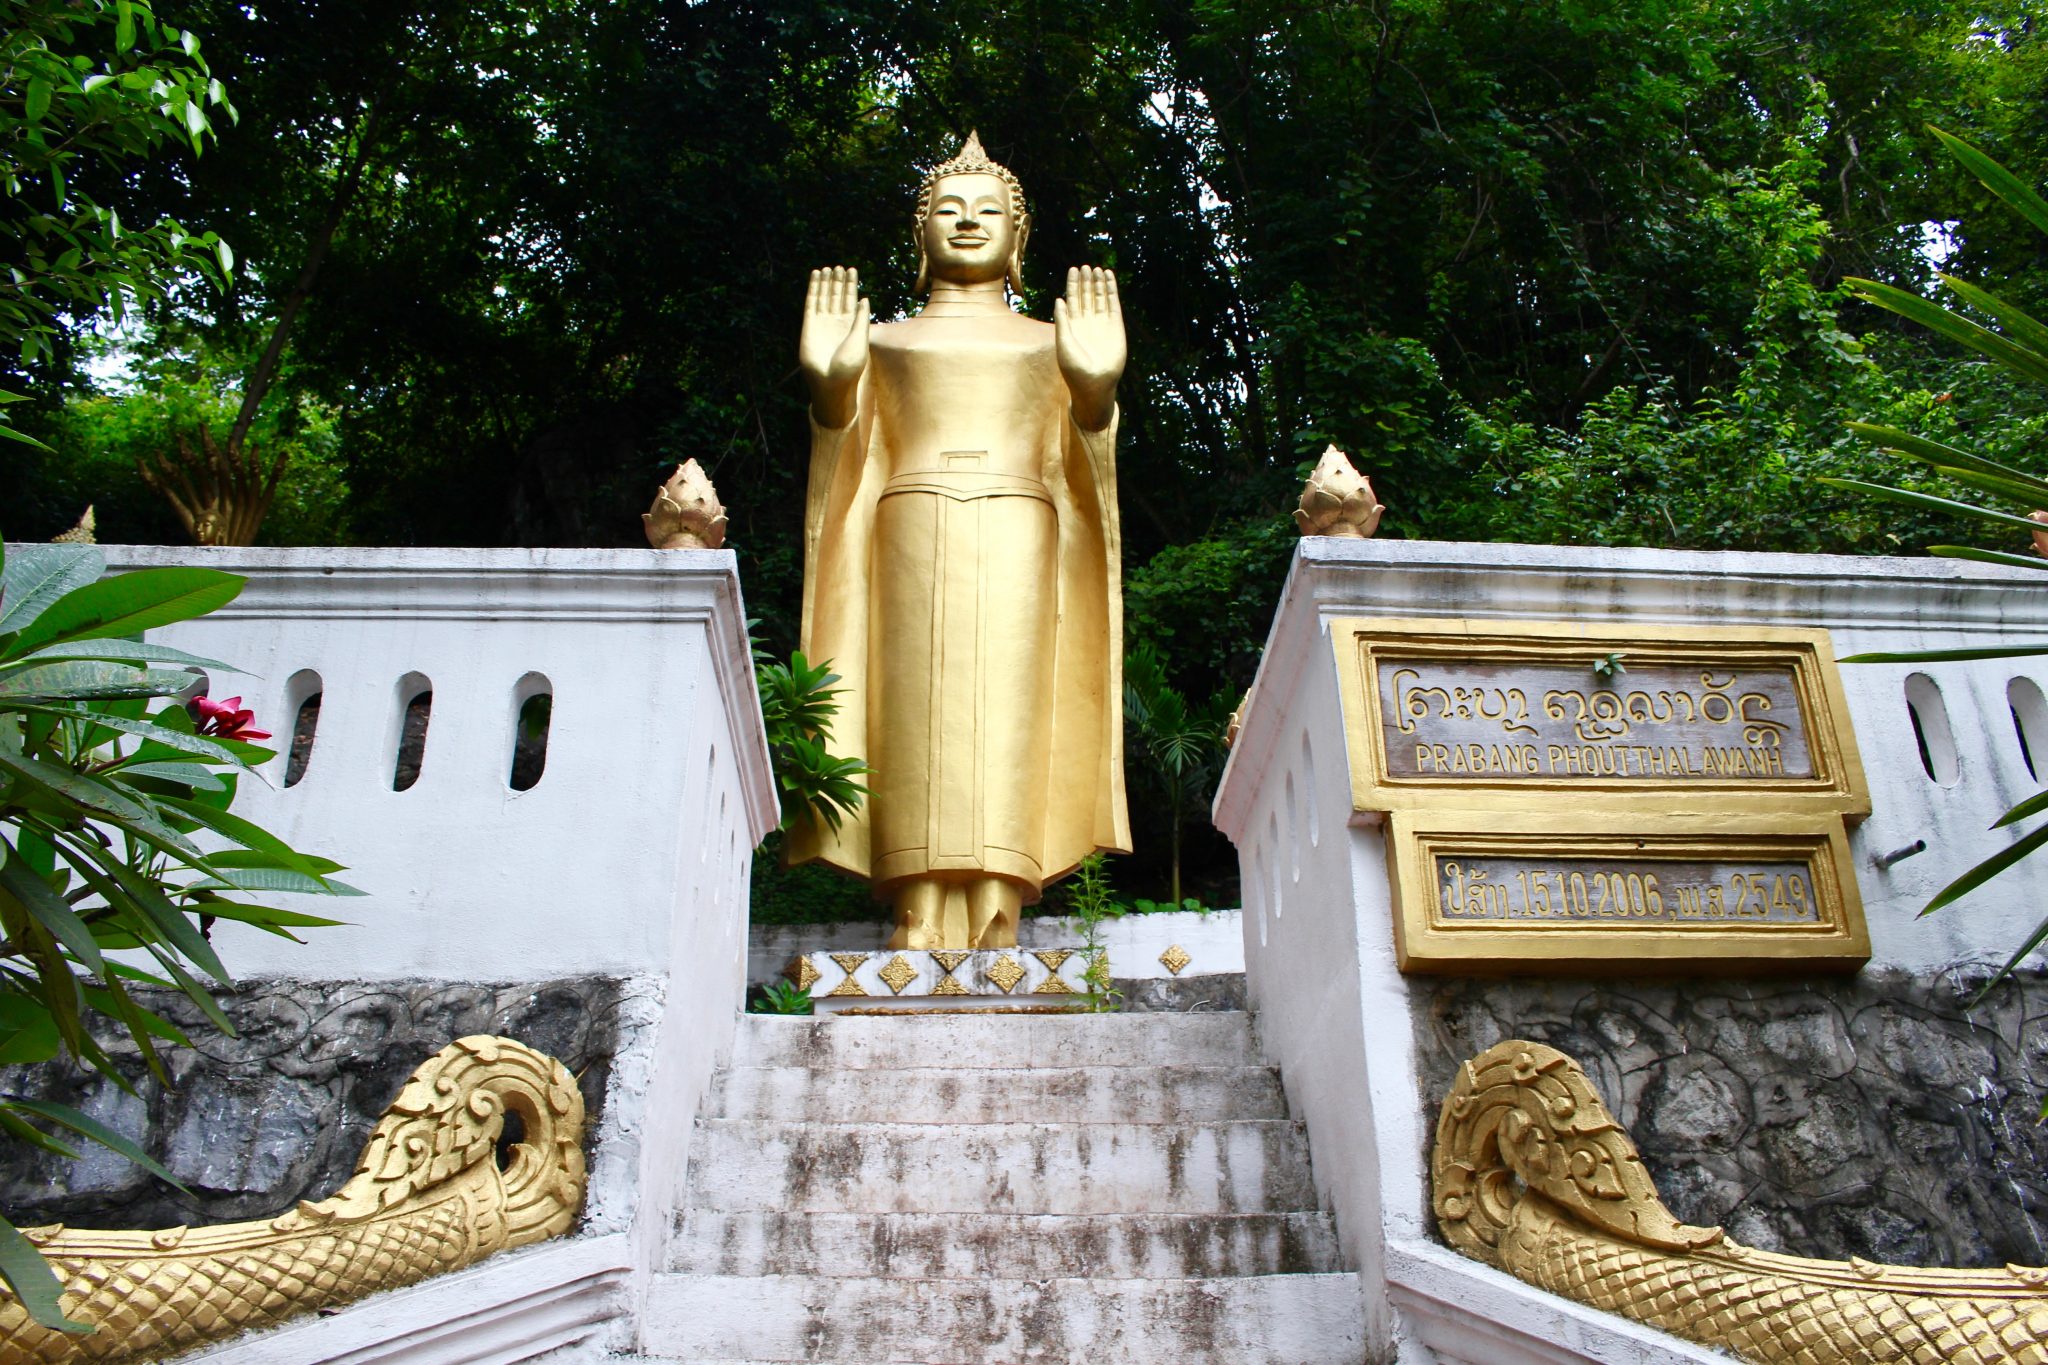 Luang Prabang - massive buddha statues